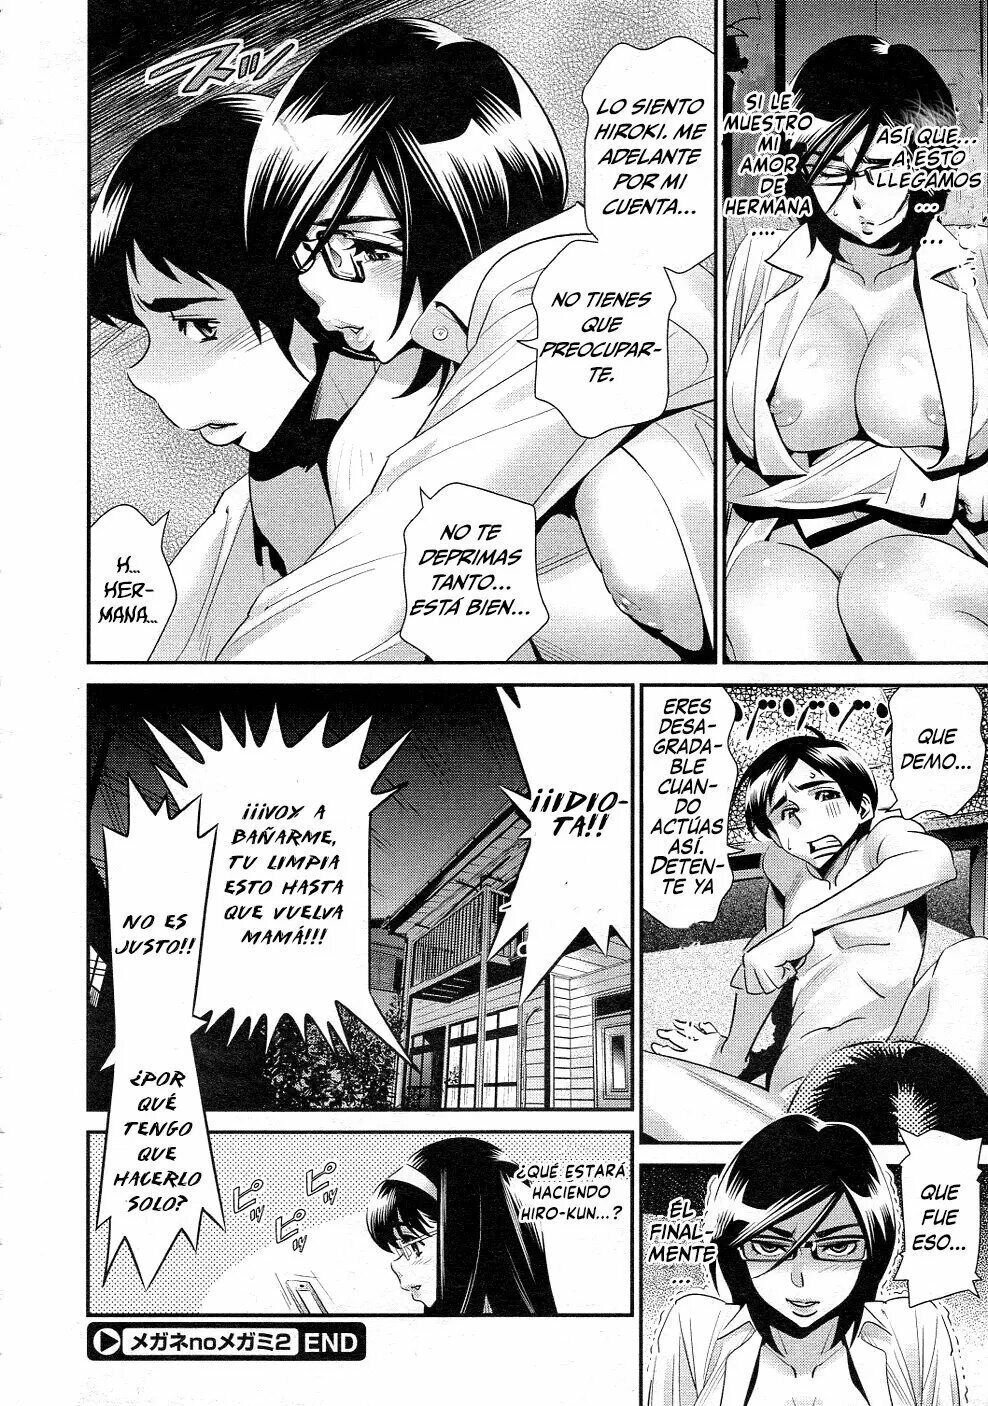 Megane no Megami #2 (Poca censura) - 24